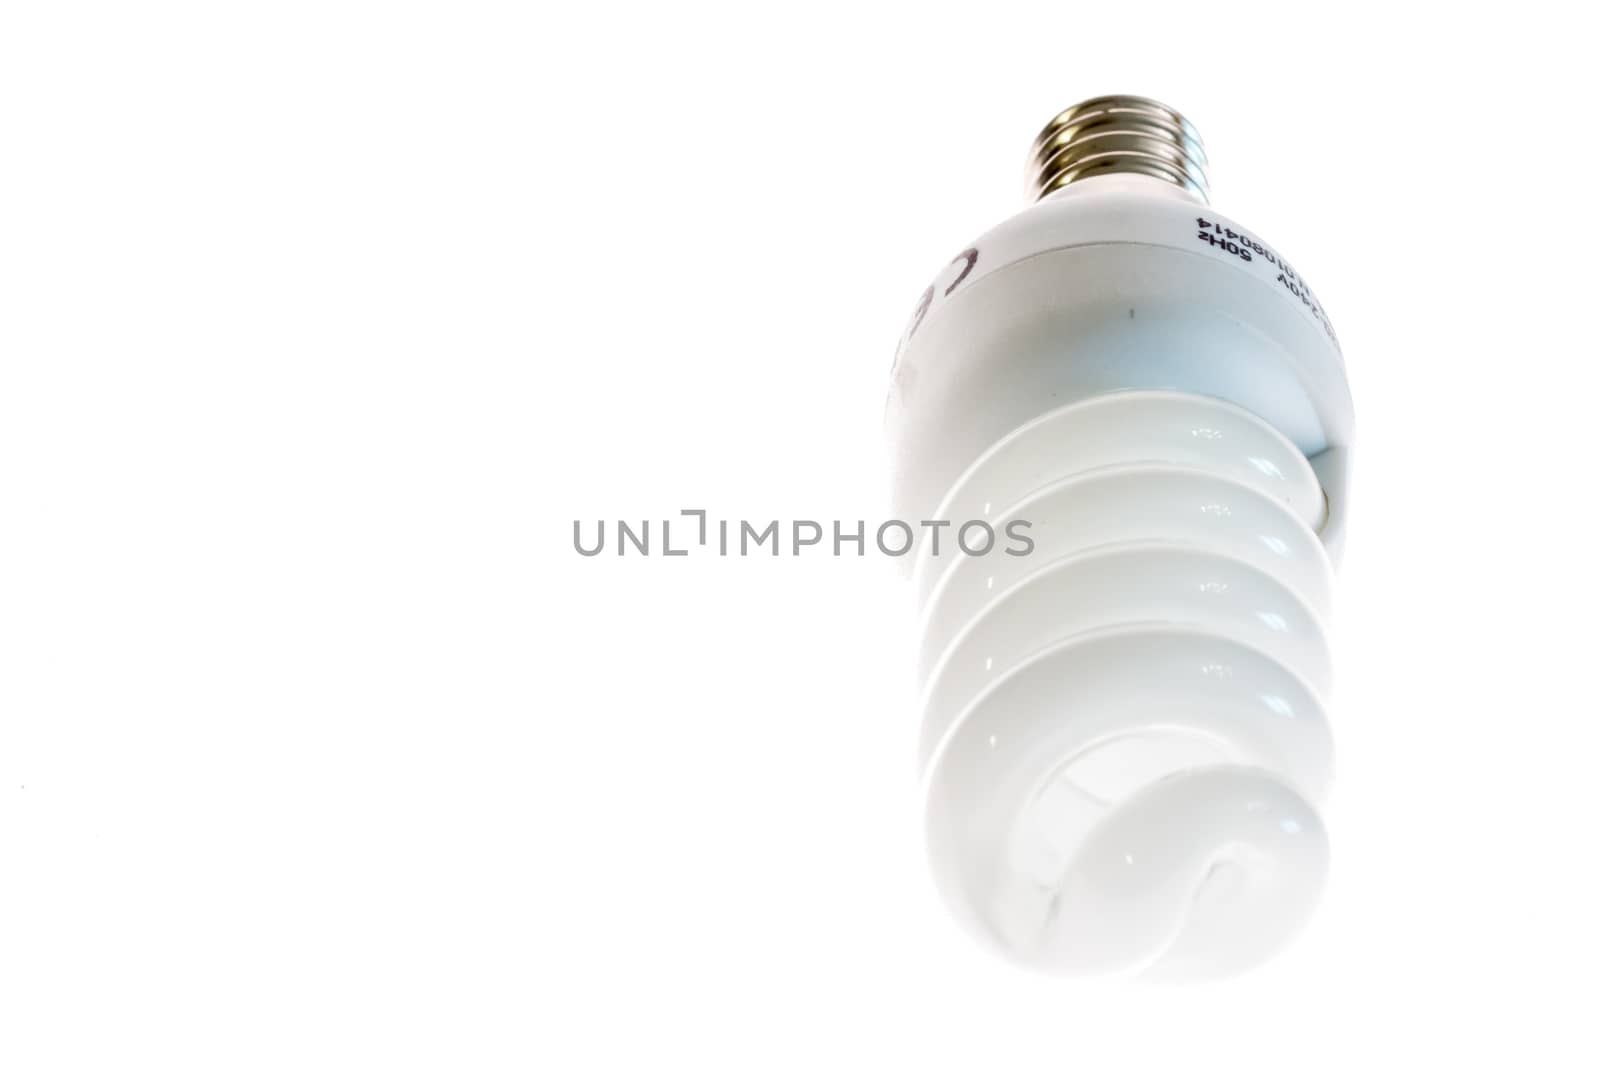 Fluorescent saving lamp by bolkan73